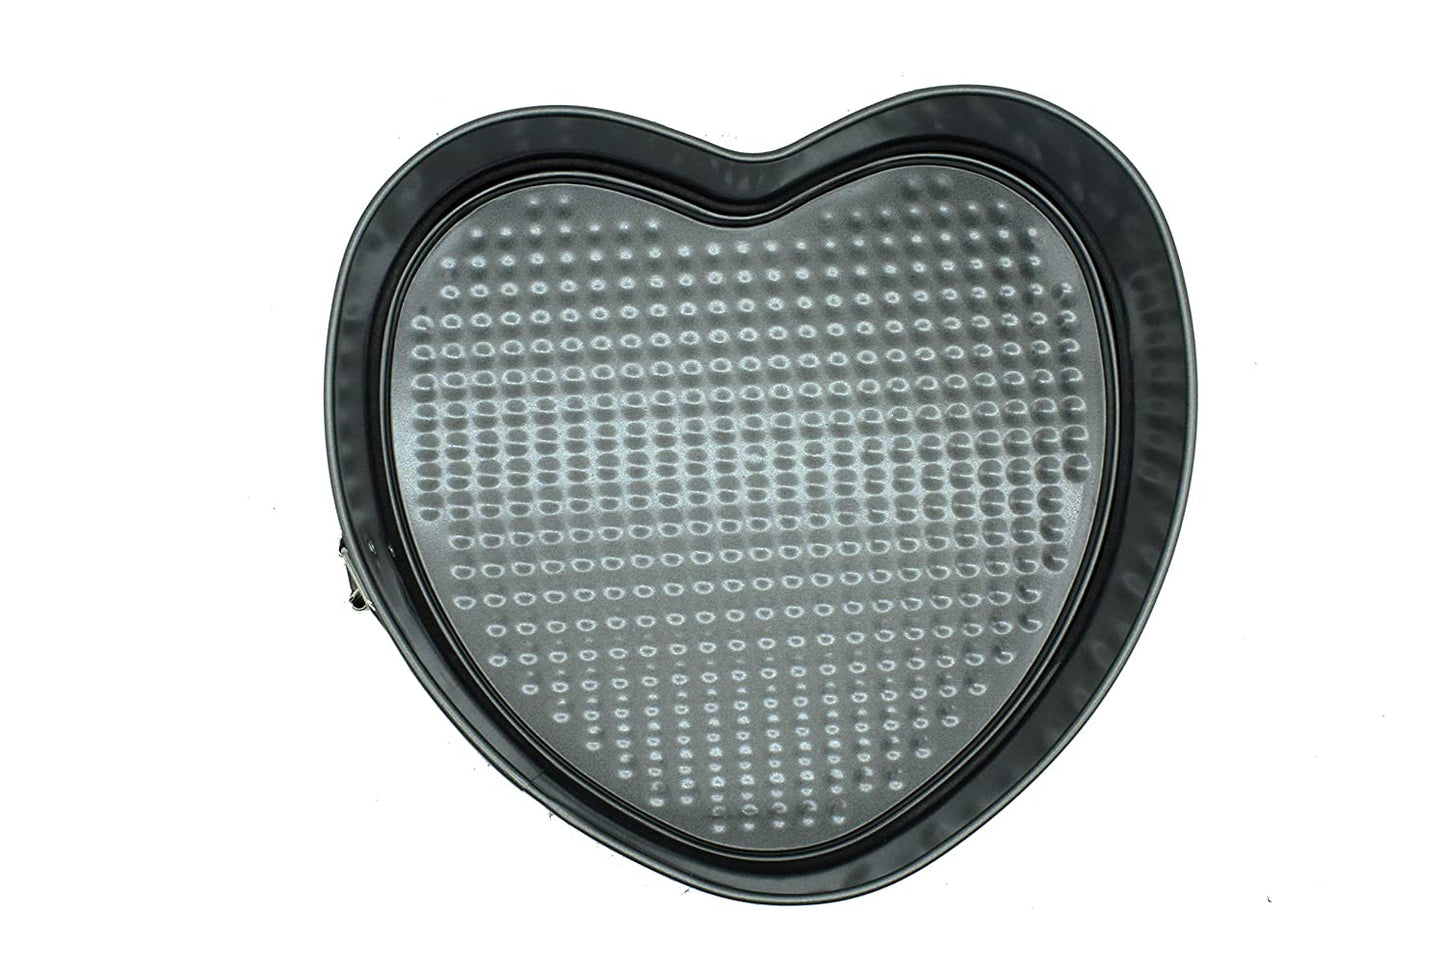 Carbon Steel Heart Shape Cake Mould | Baking Pan (Size No. : 4)